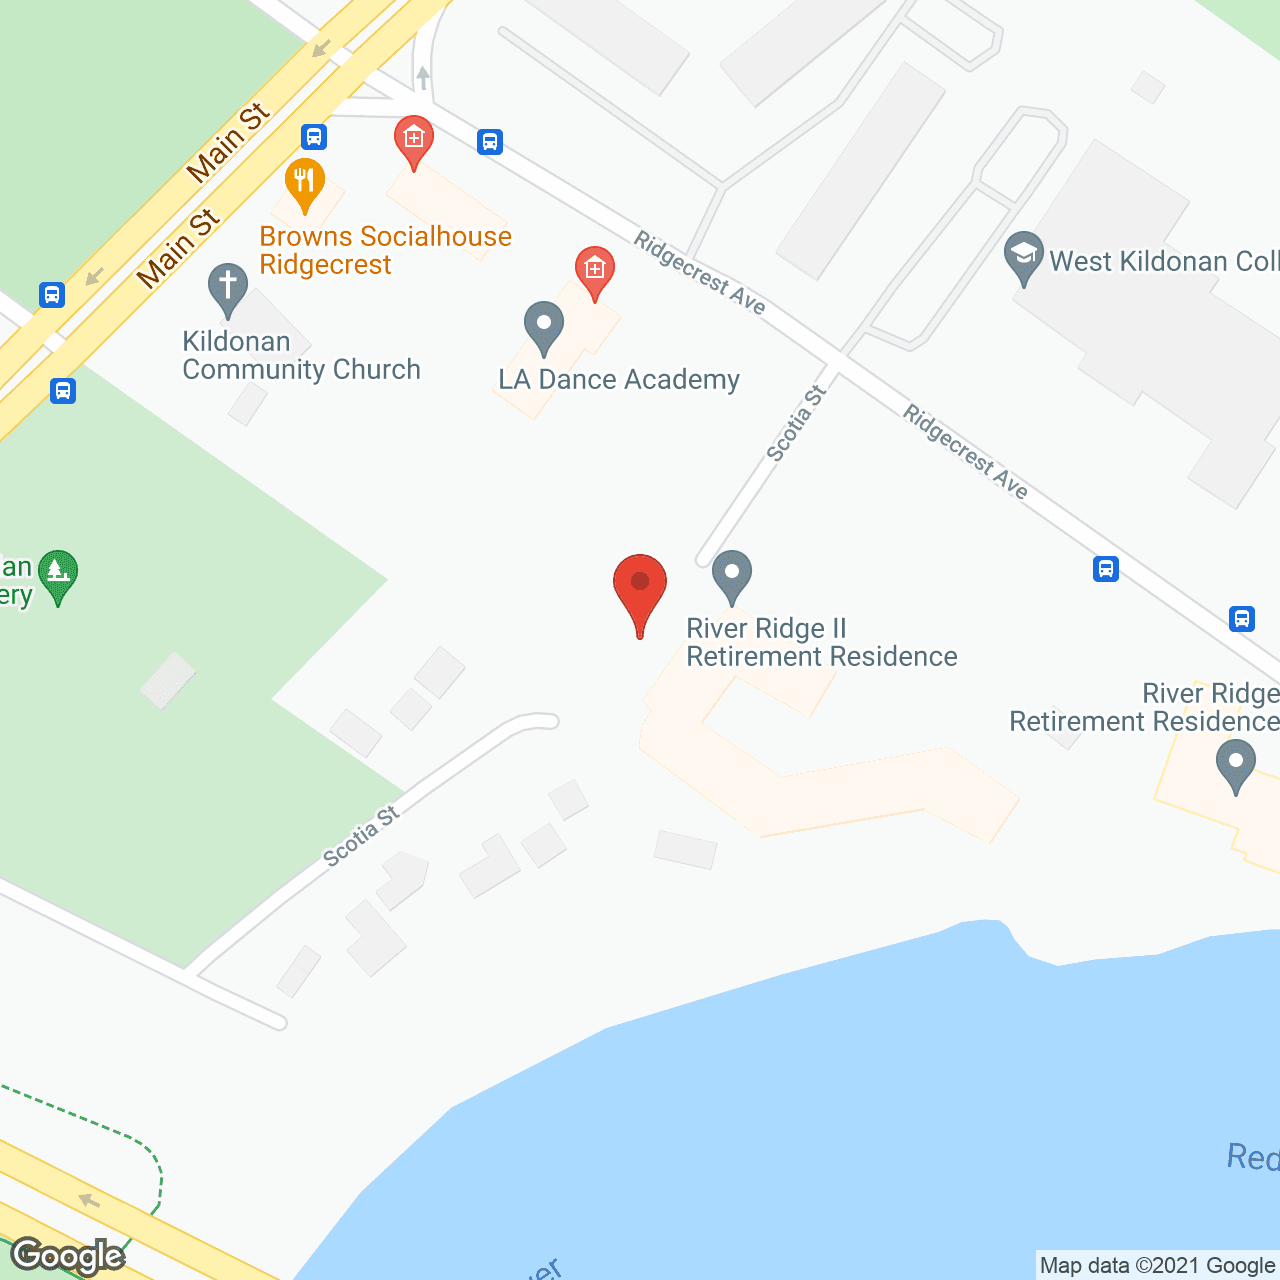 River Ridge II Retirement Residence in google map